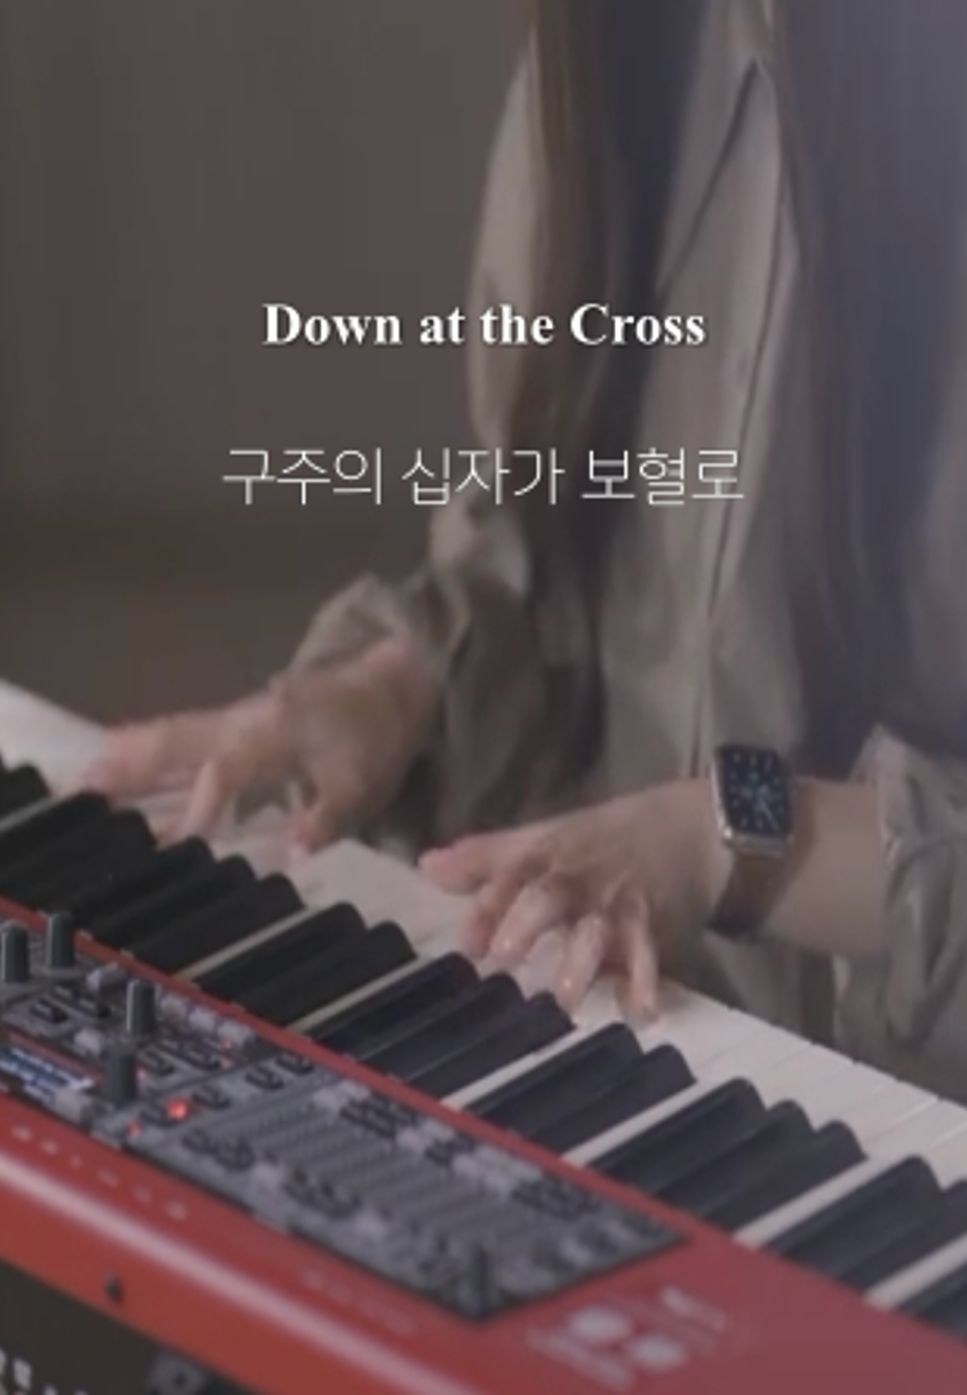 J.H. Stockton - 구주의 십자가 보혈로 Down at the Cross by Choi Chanmi